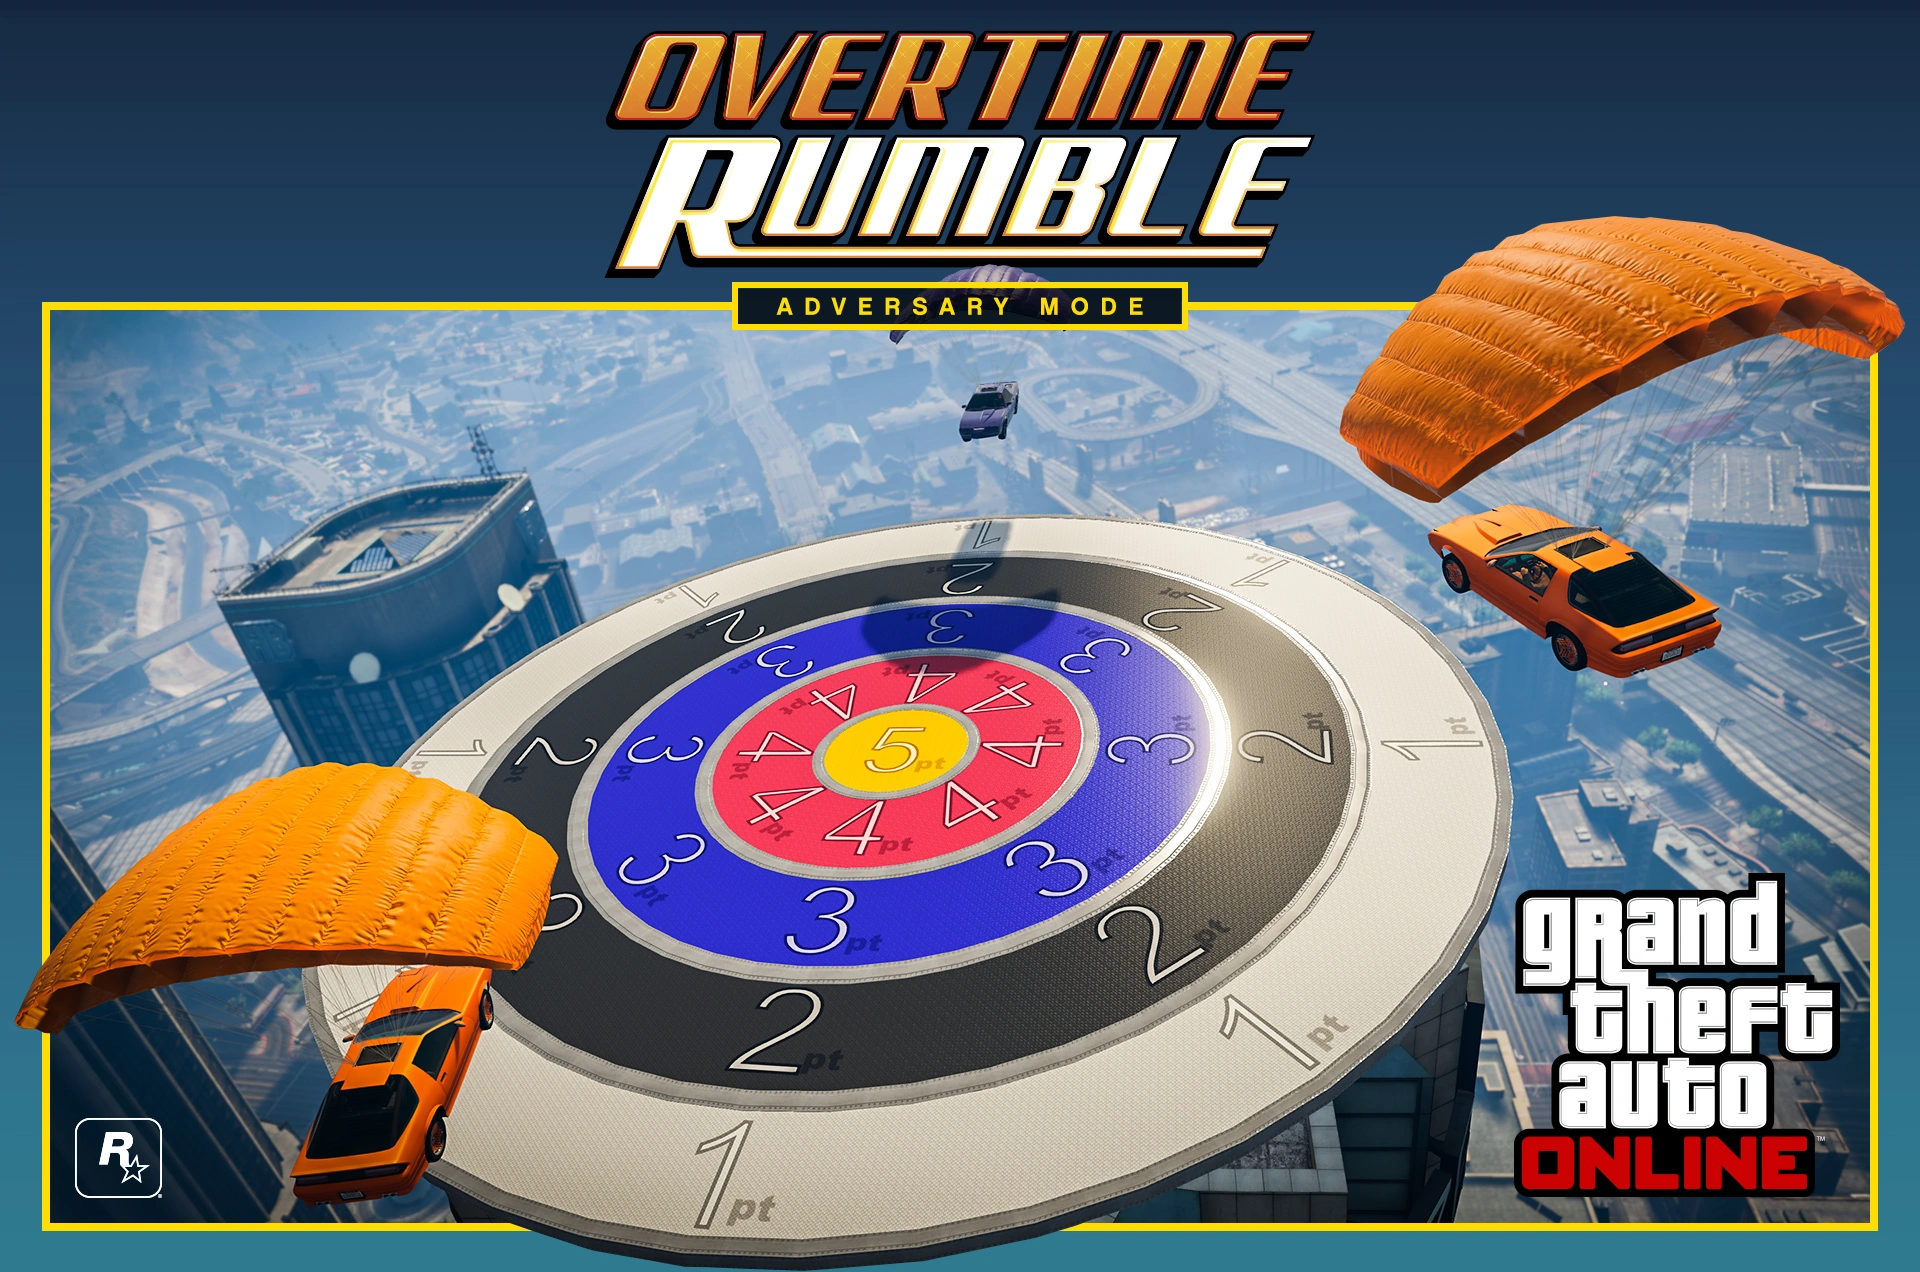 gta online overtime rumble adversary mode